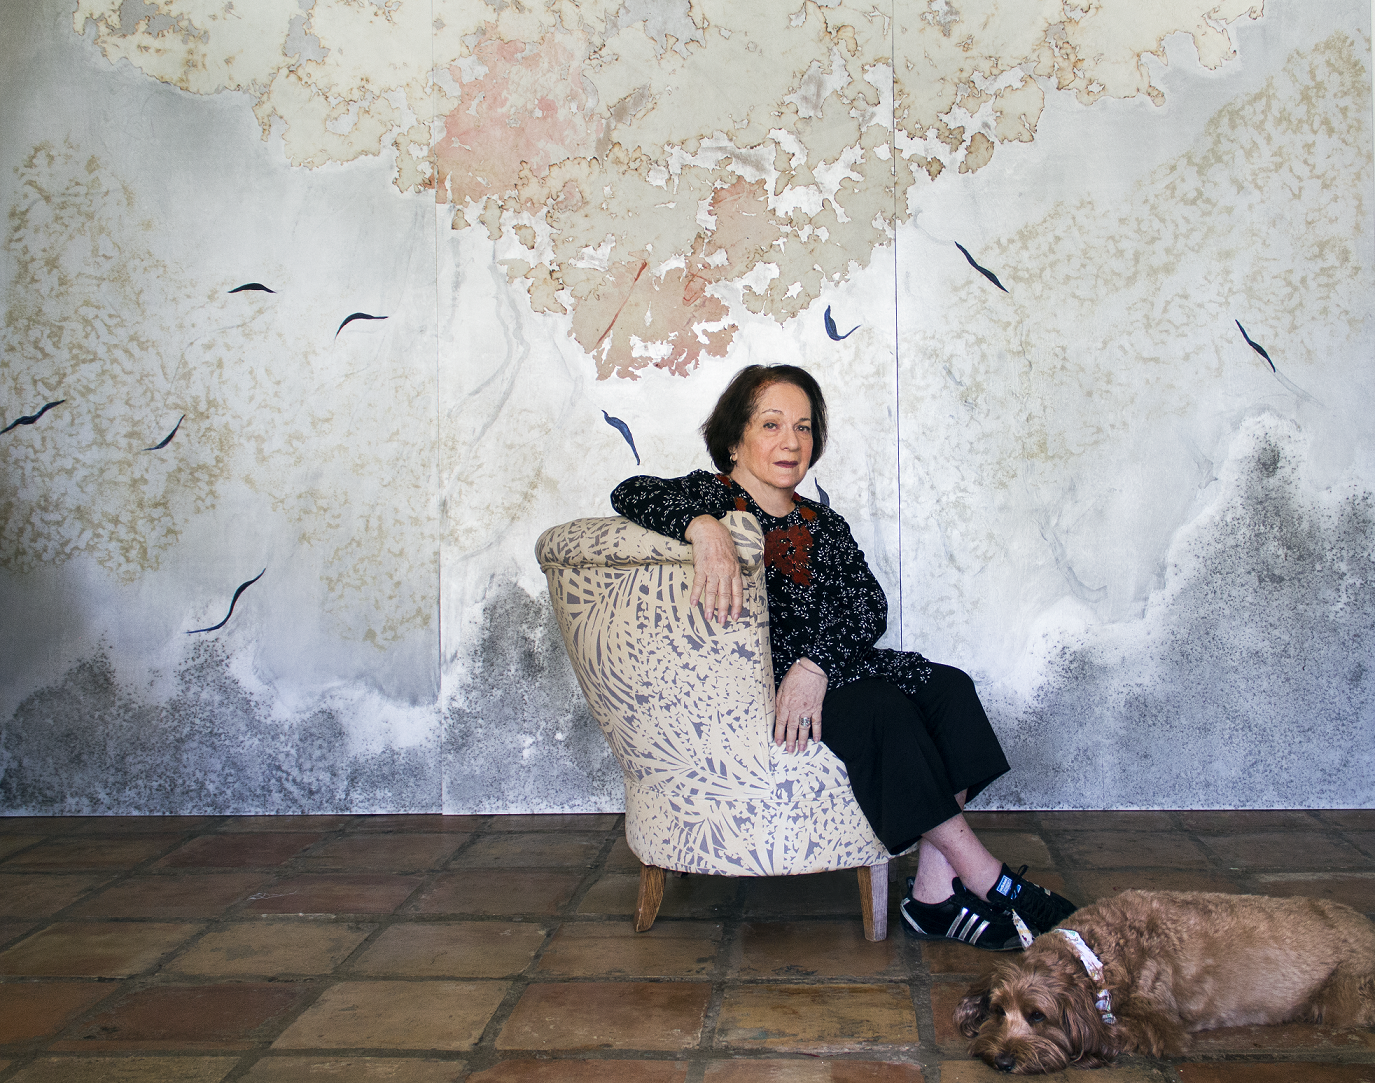 Rinden homenaje a Mira Lehr, la precursora del ecofeminismo en el arte - mira-lehr-portrait-by-michael-e-fryd